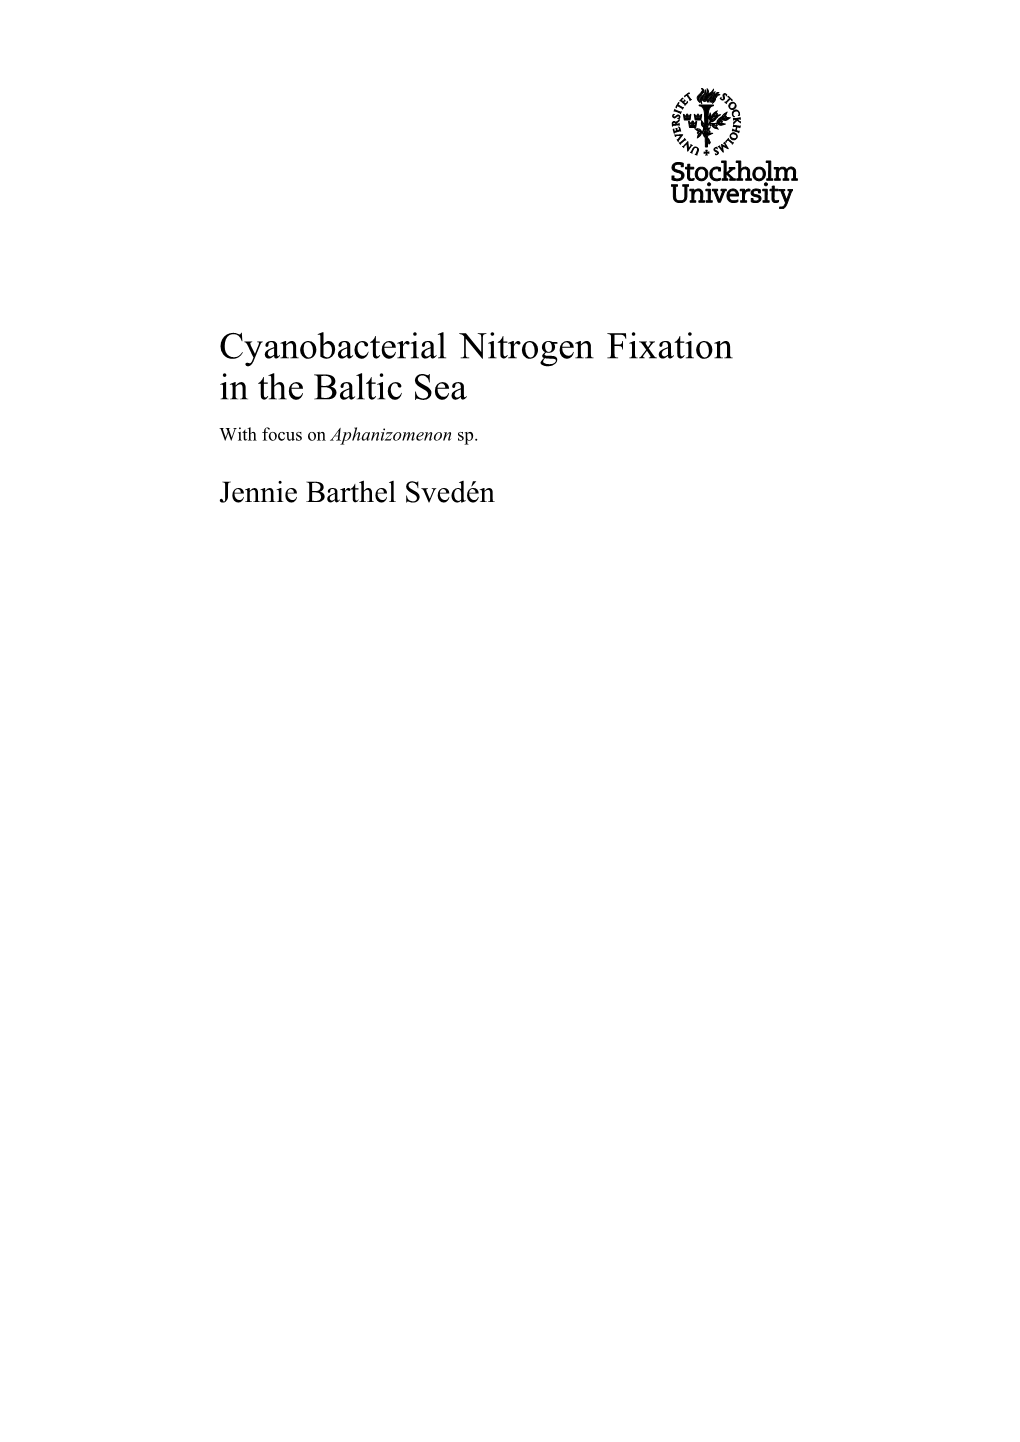 Cyanobacterial Nitrogen Fixation in the Baltic Sea with Focus on Aphanizomenon Sp